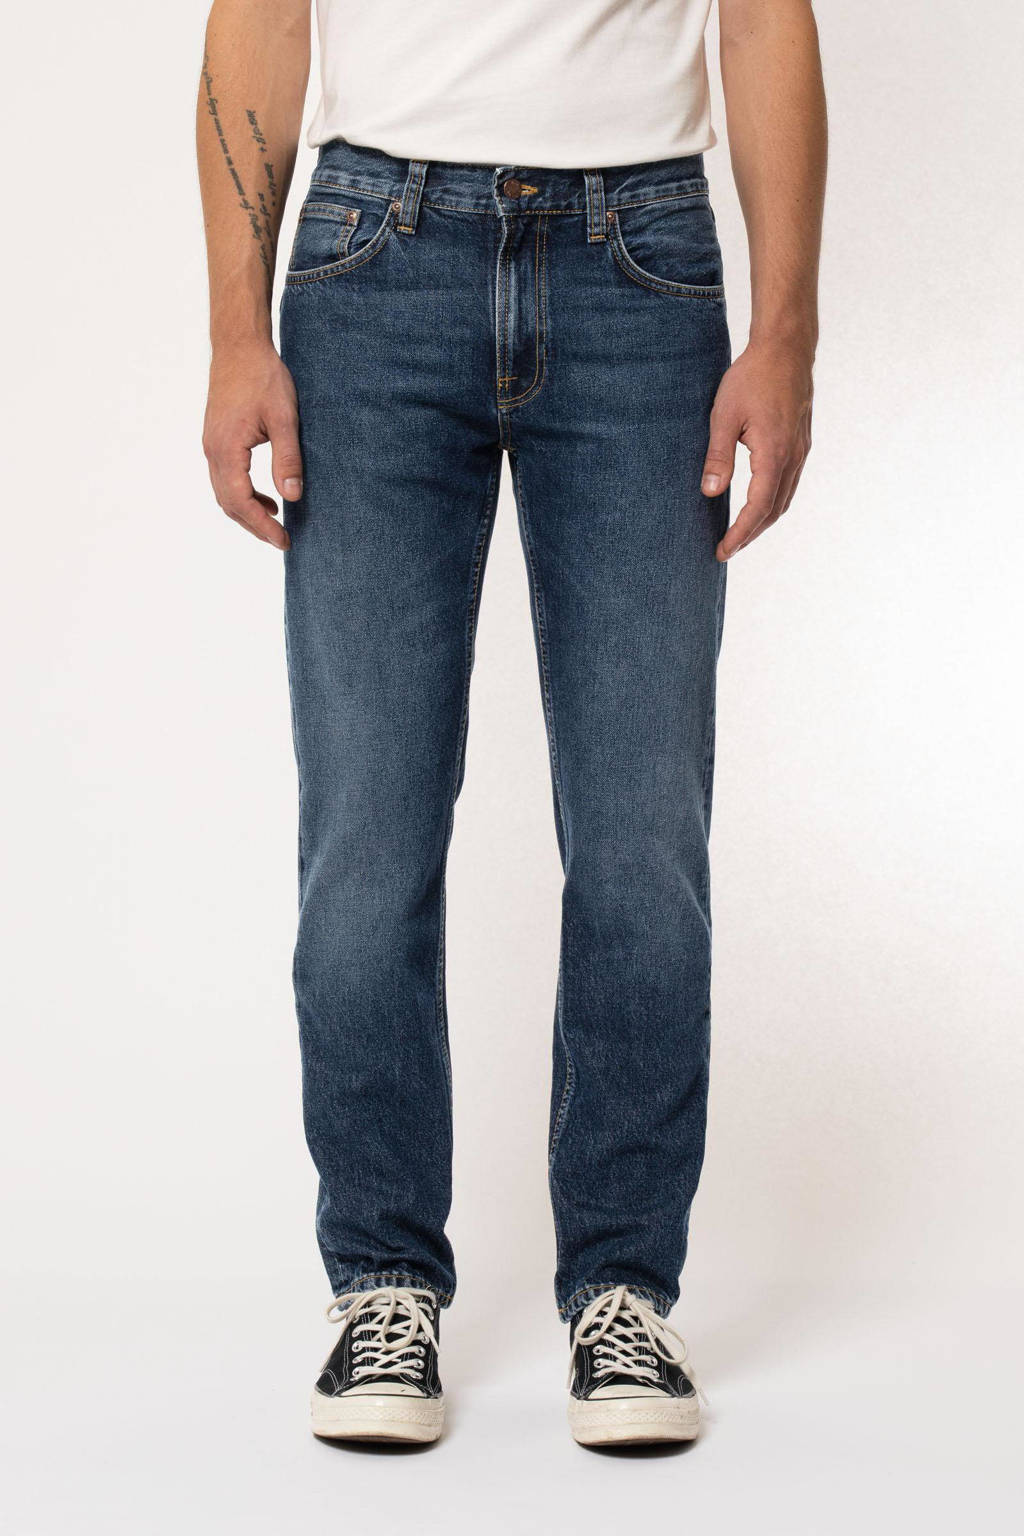 Nudie Jeans regular straight fit jeans Gritty Jackson blue slate, Blue Slate